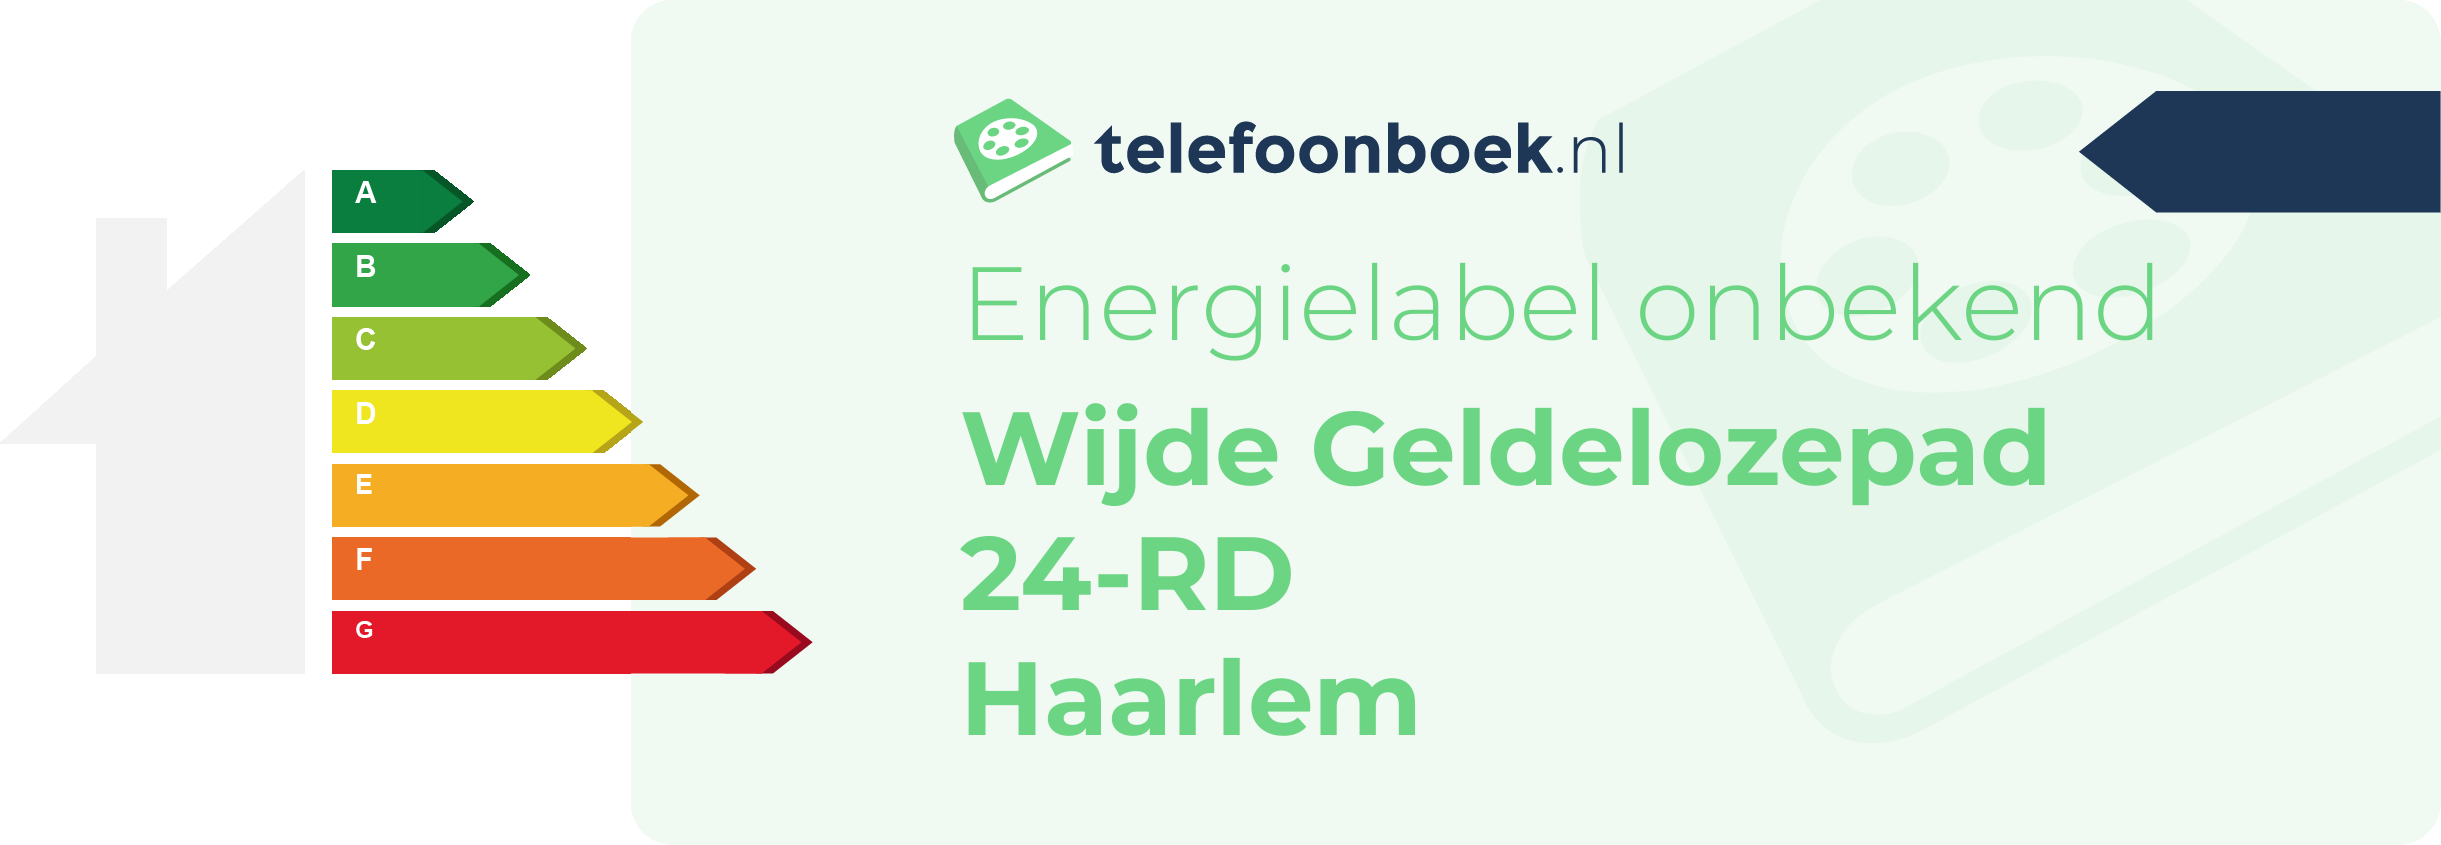 Energielabel Wijde Geldelozepad 24-RD Haarlem